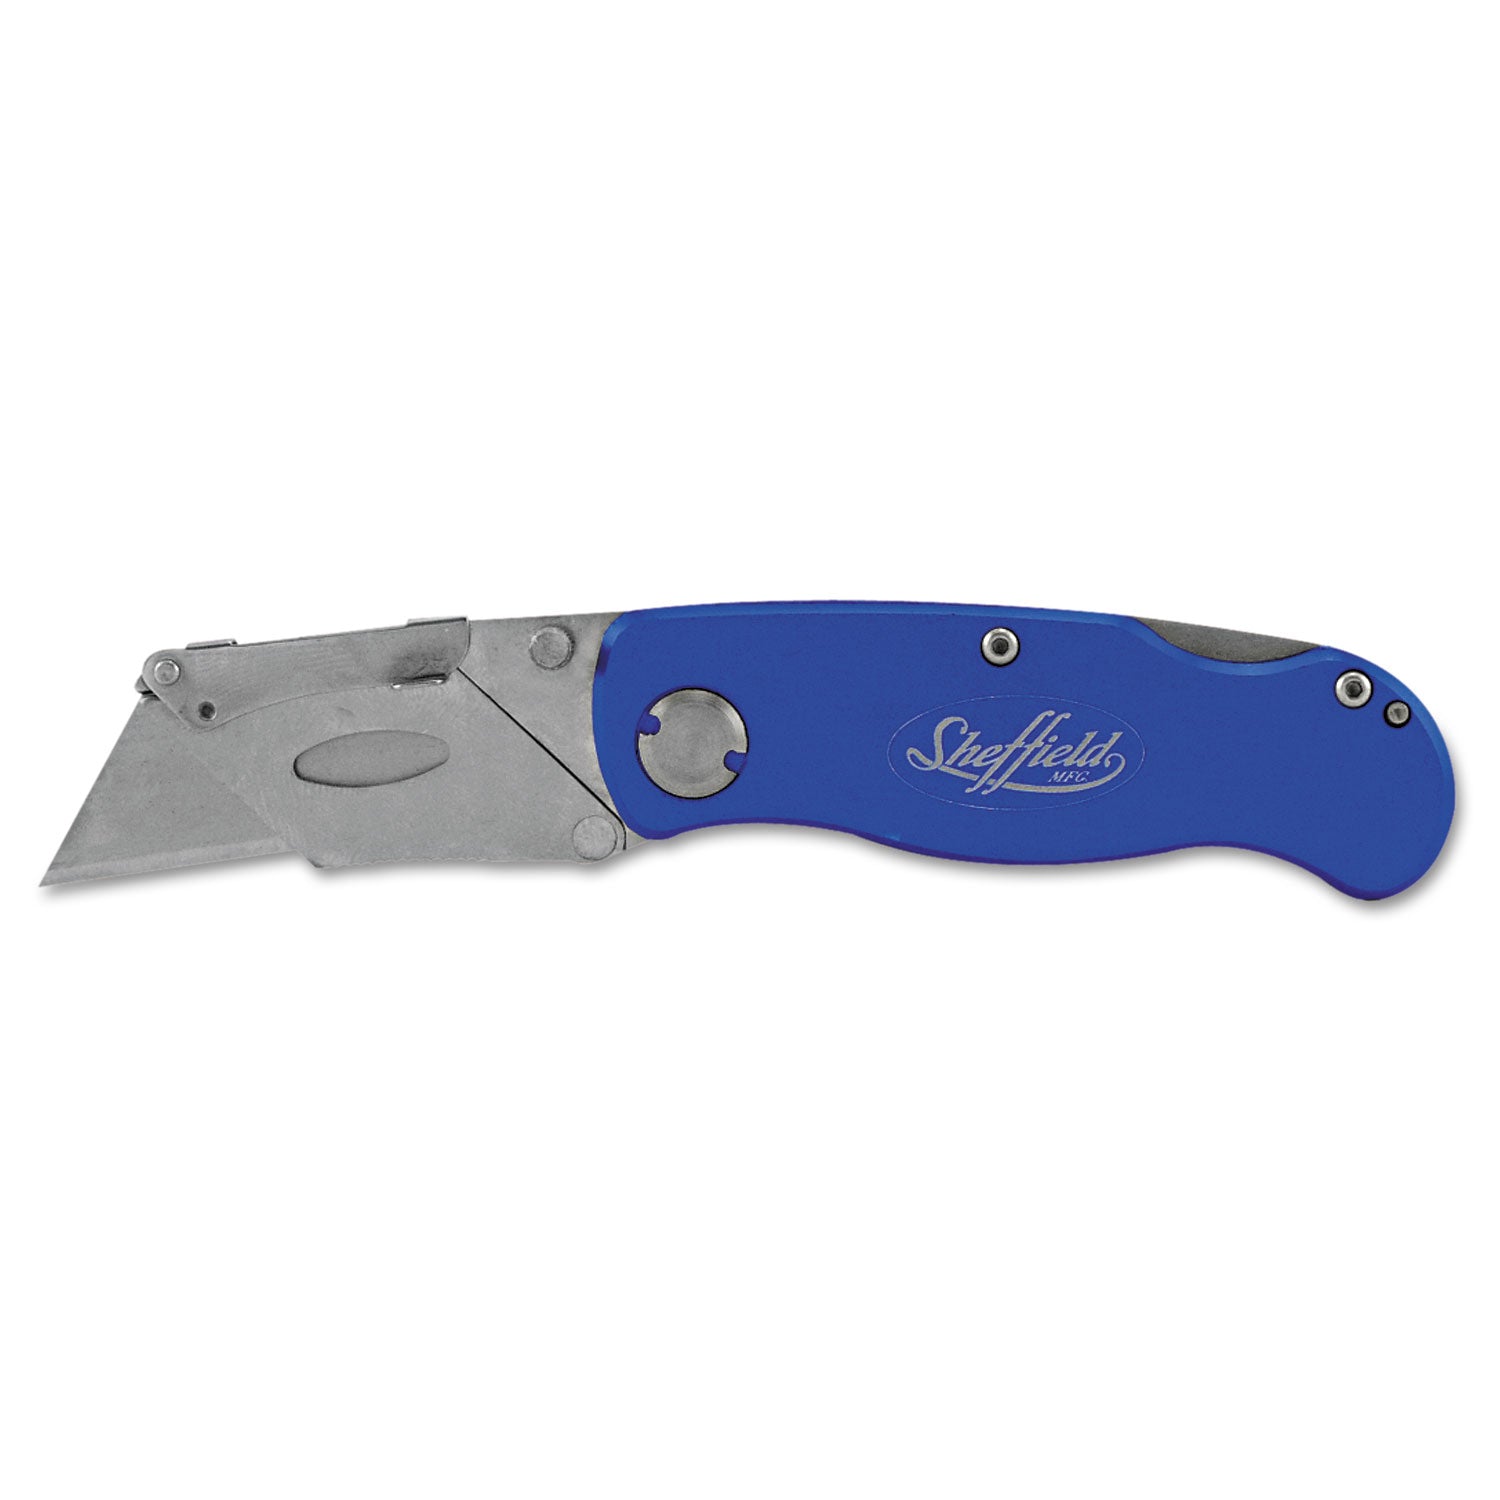 Sheffield Folding Lockback Knife, 1 Utility Blade, 2" Blade, 3.5" Aluminum Handle, Blue - 